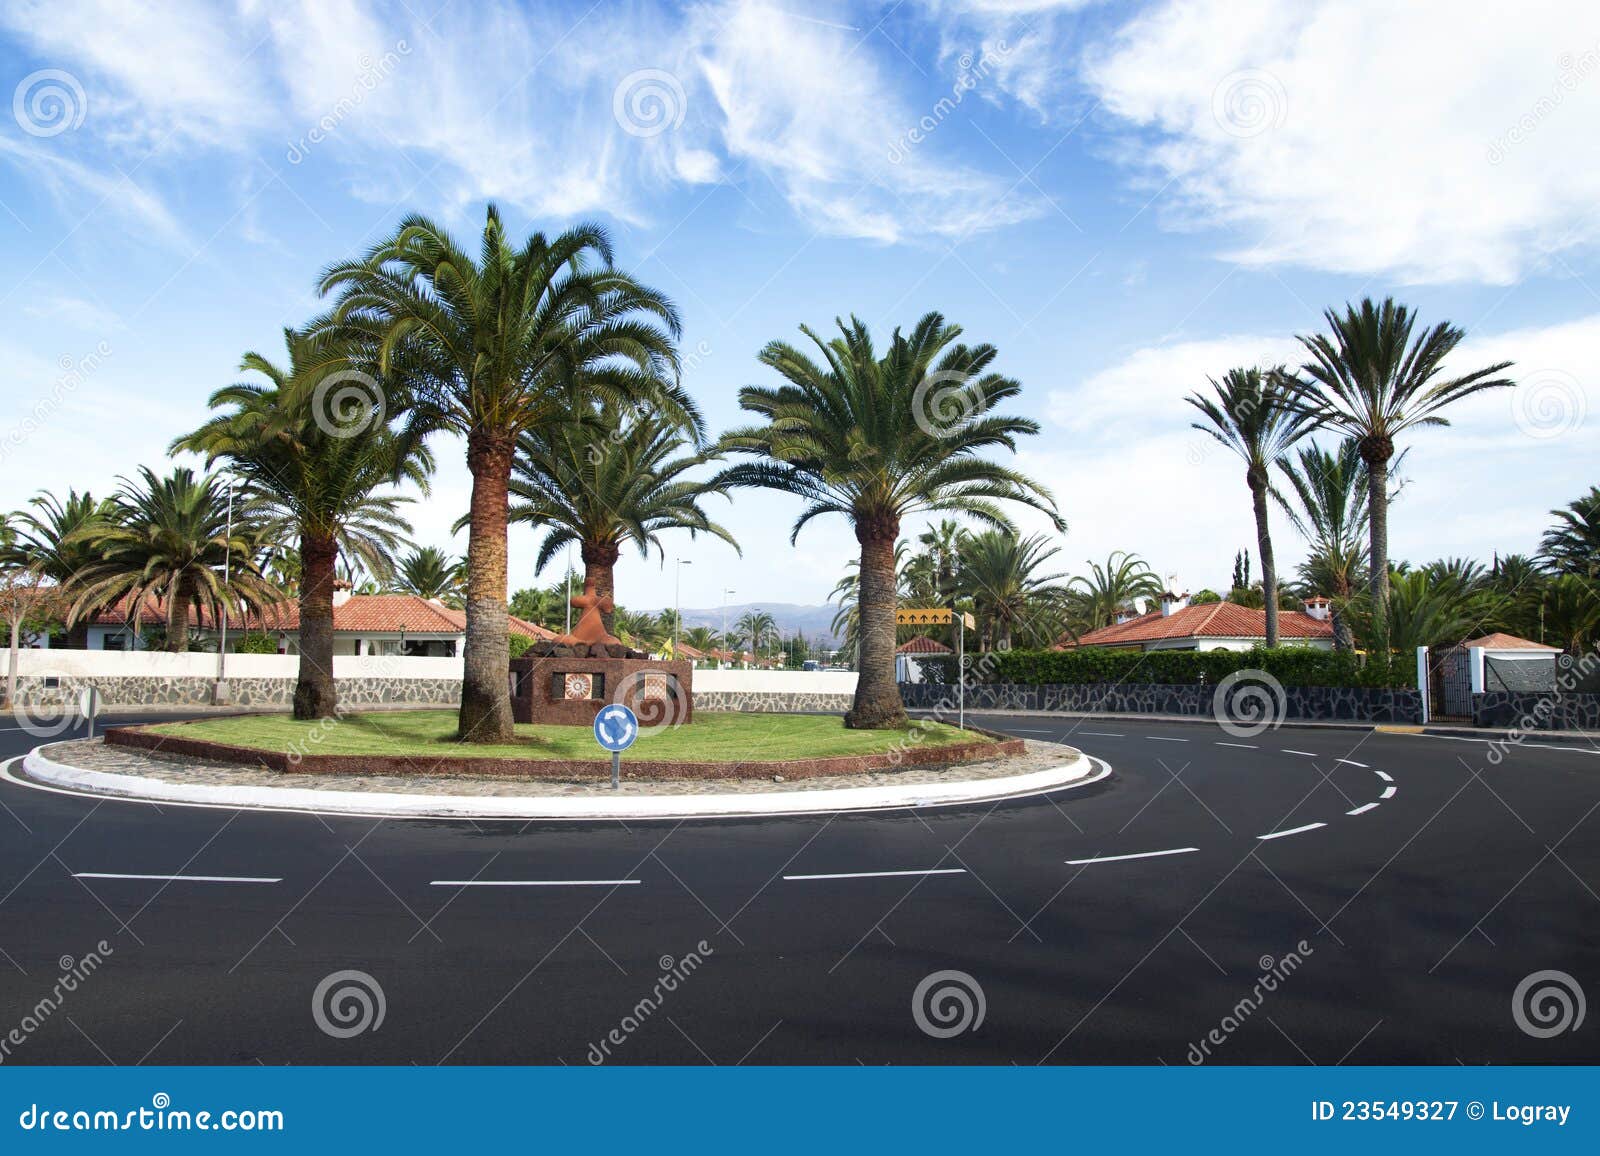 maspalomas, circular asphalt road.